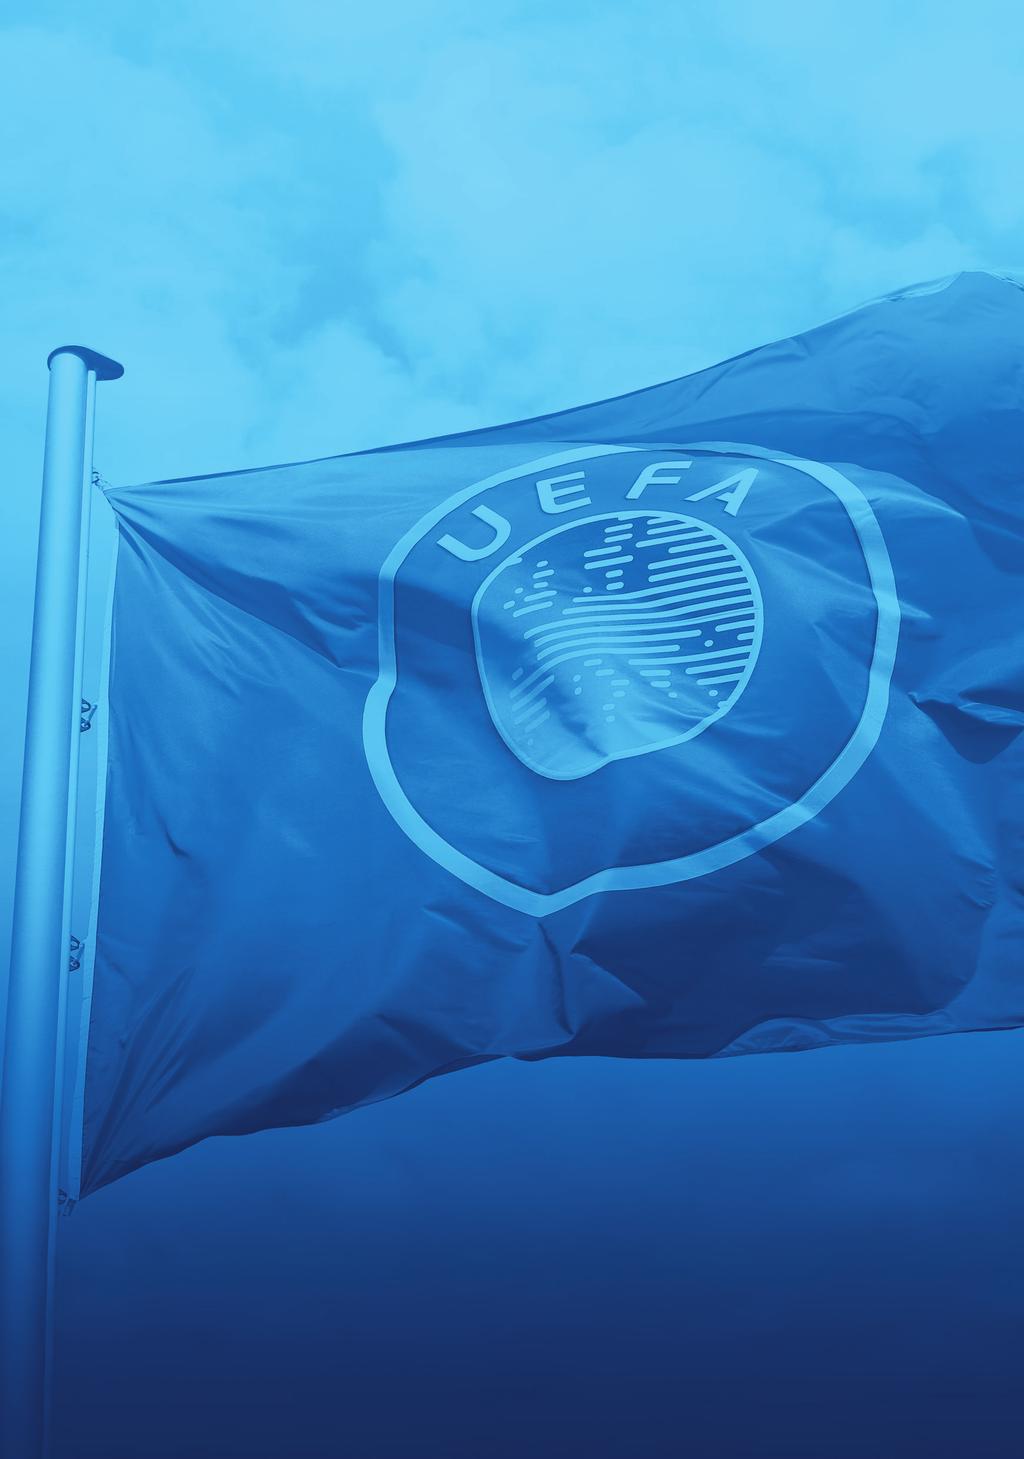 UEFA Statutes Rules of Procedure of the UEFA Congress Regulations